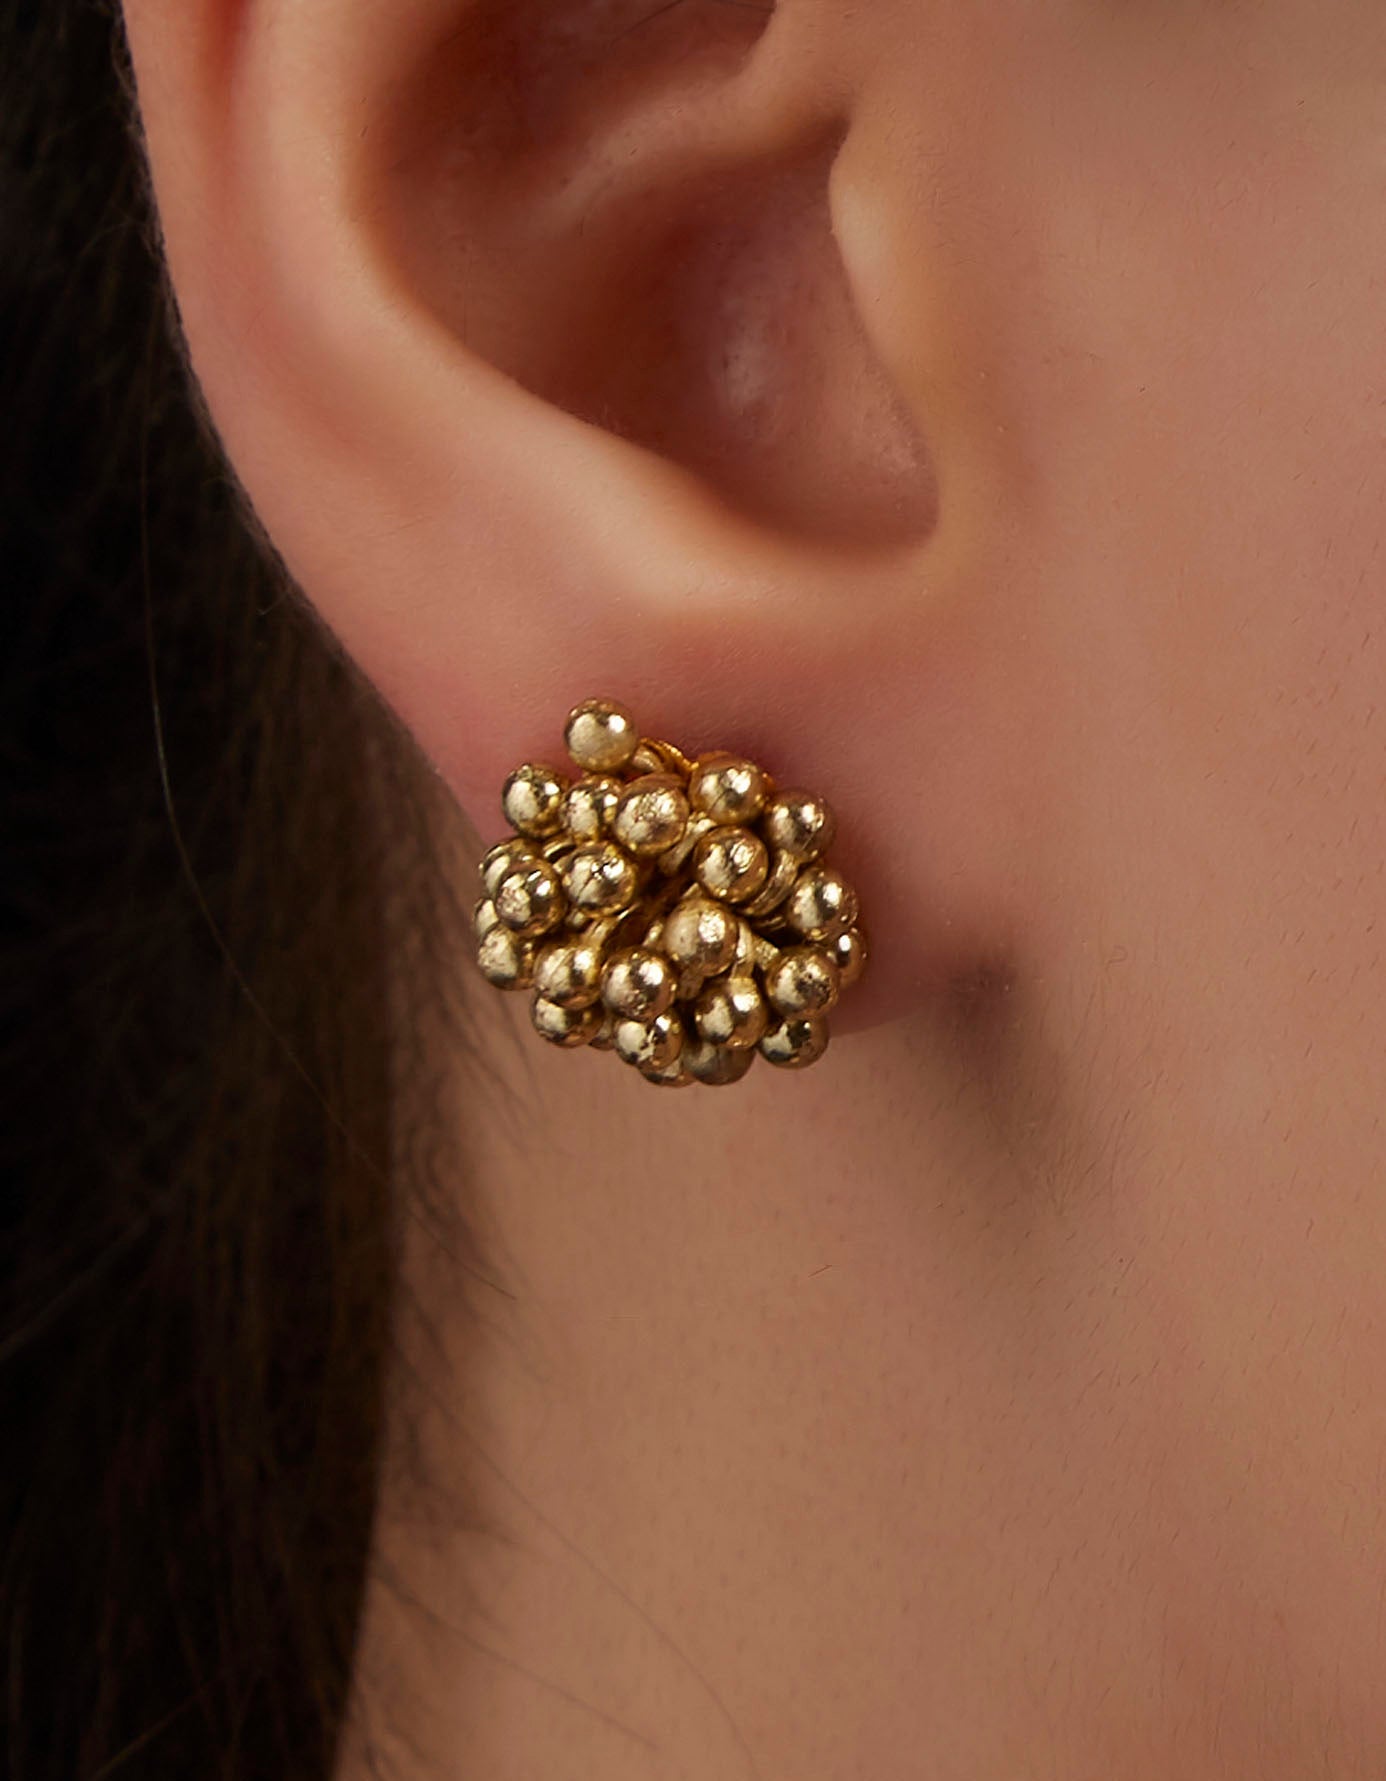 Gold Beaded Stud Earrings